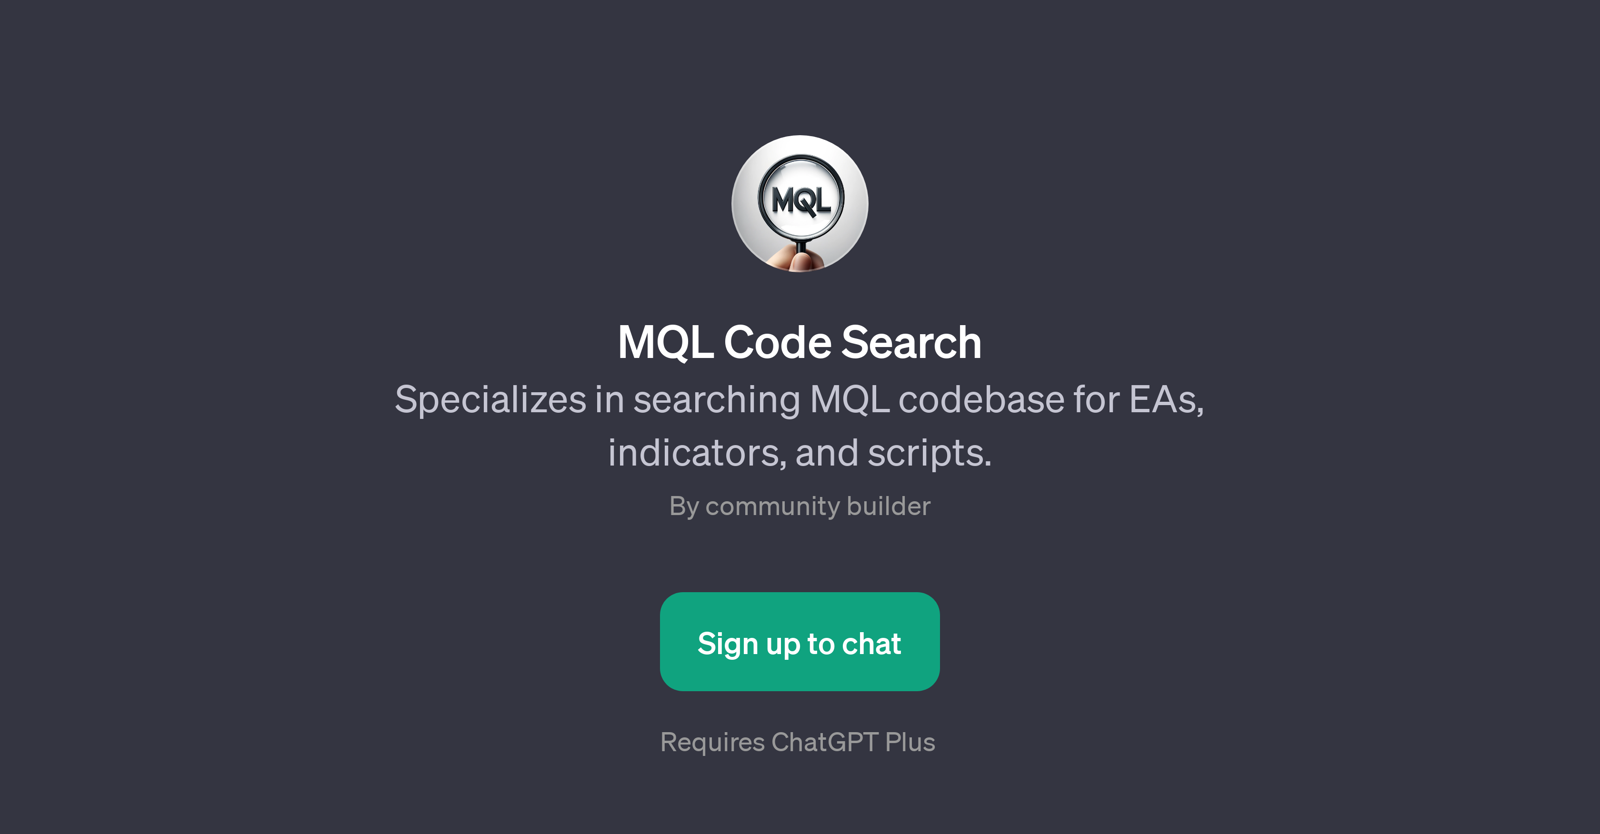 MQL Code Search website